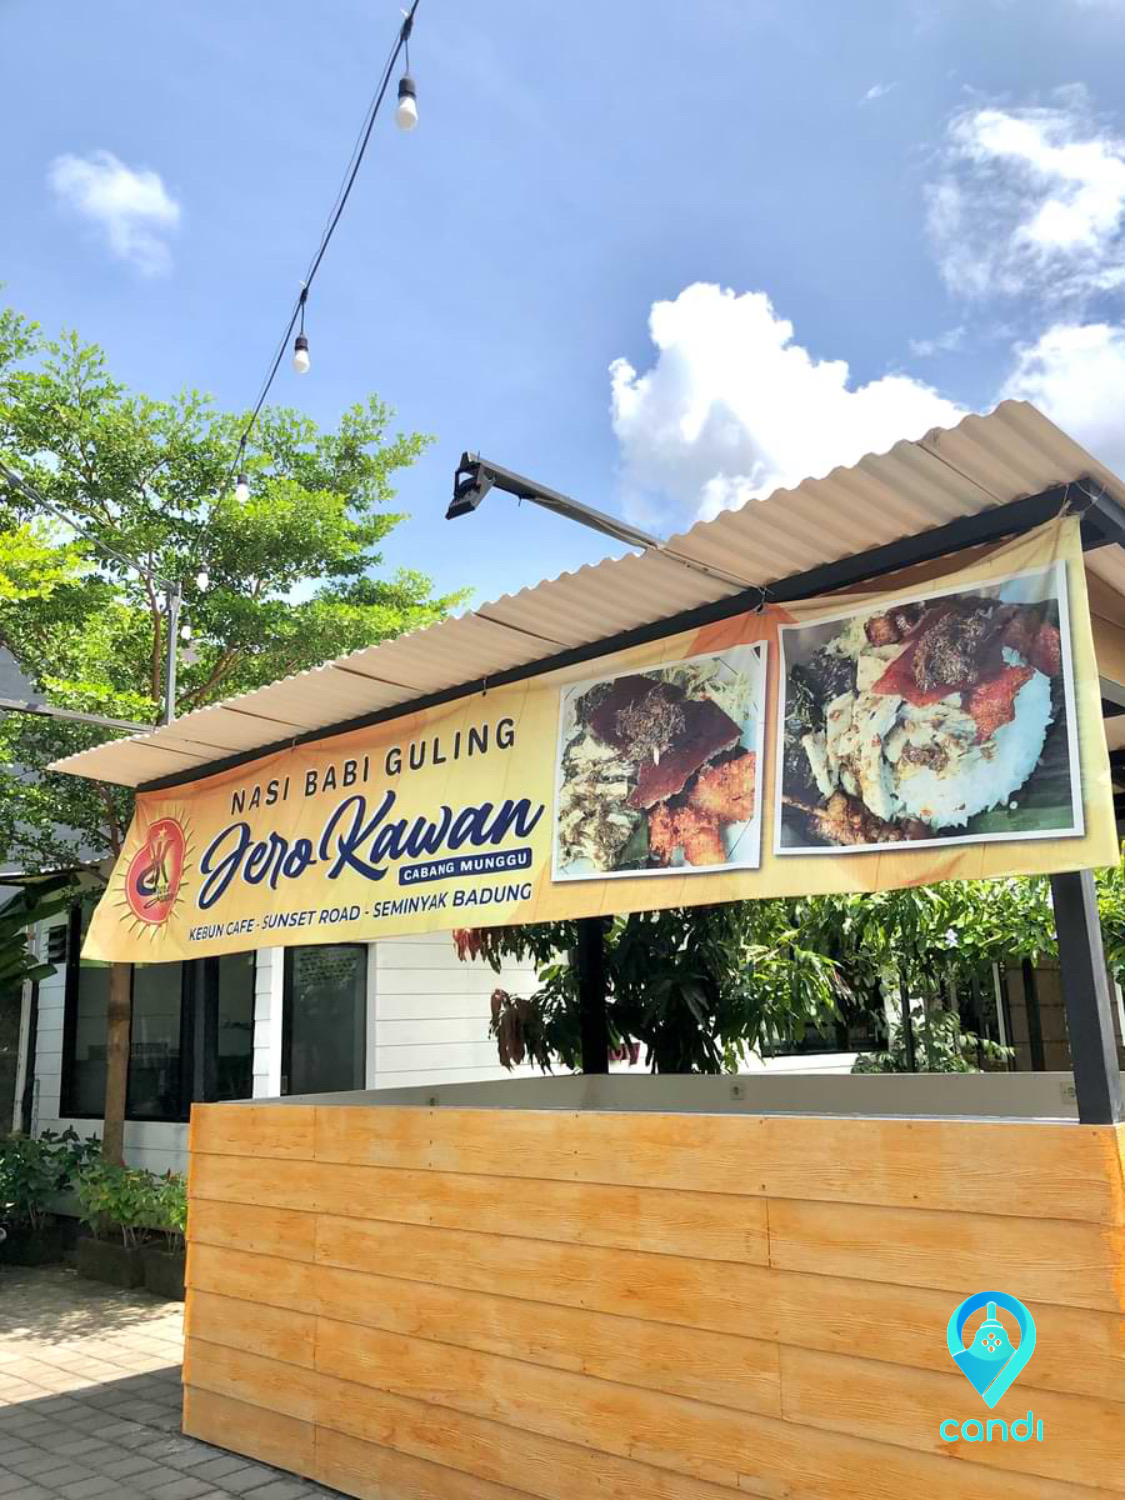 Babi Guling Jero Kawan Kebun Cafe Seminyak, Bali